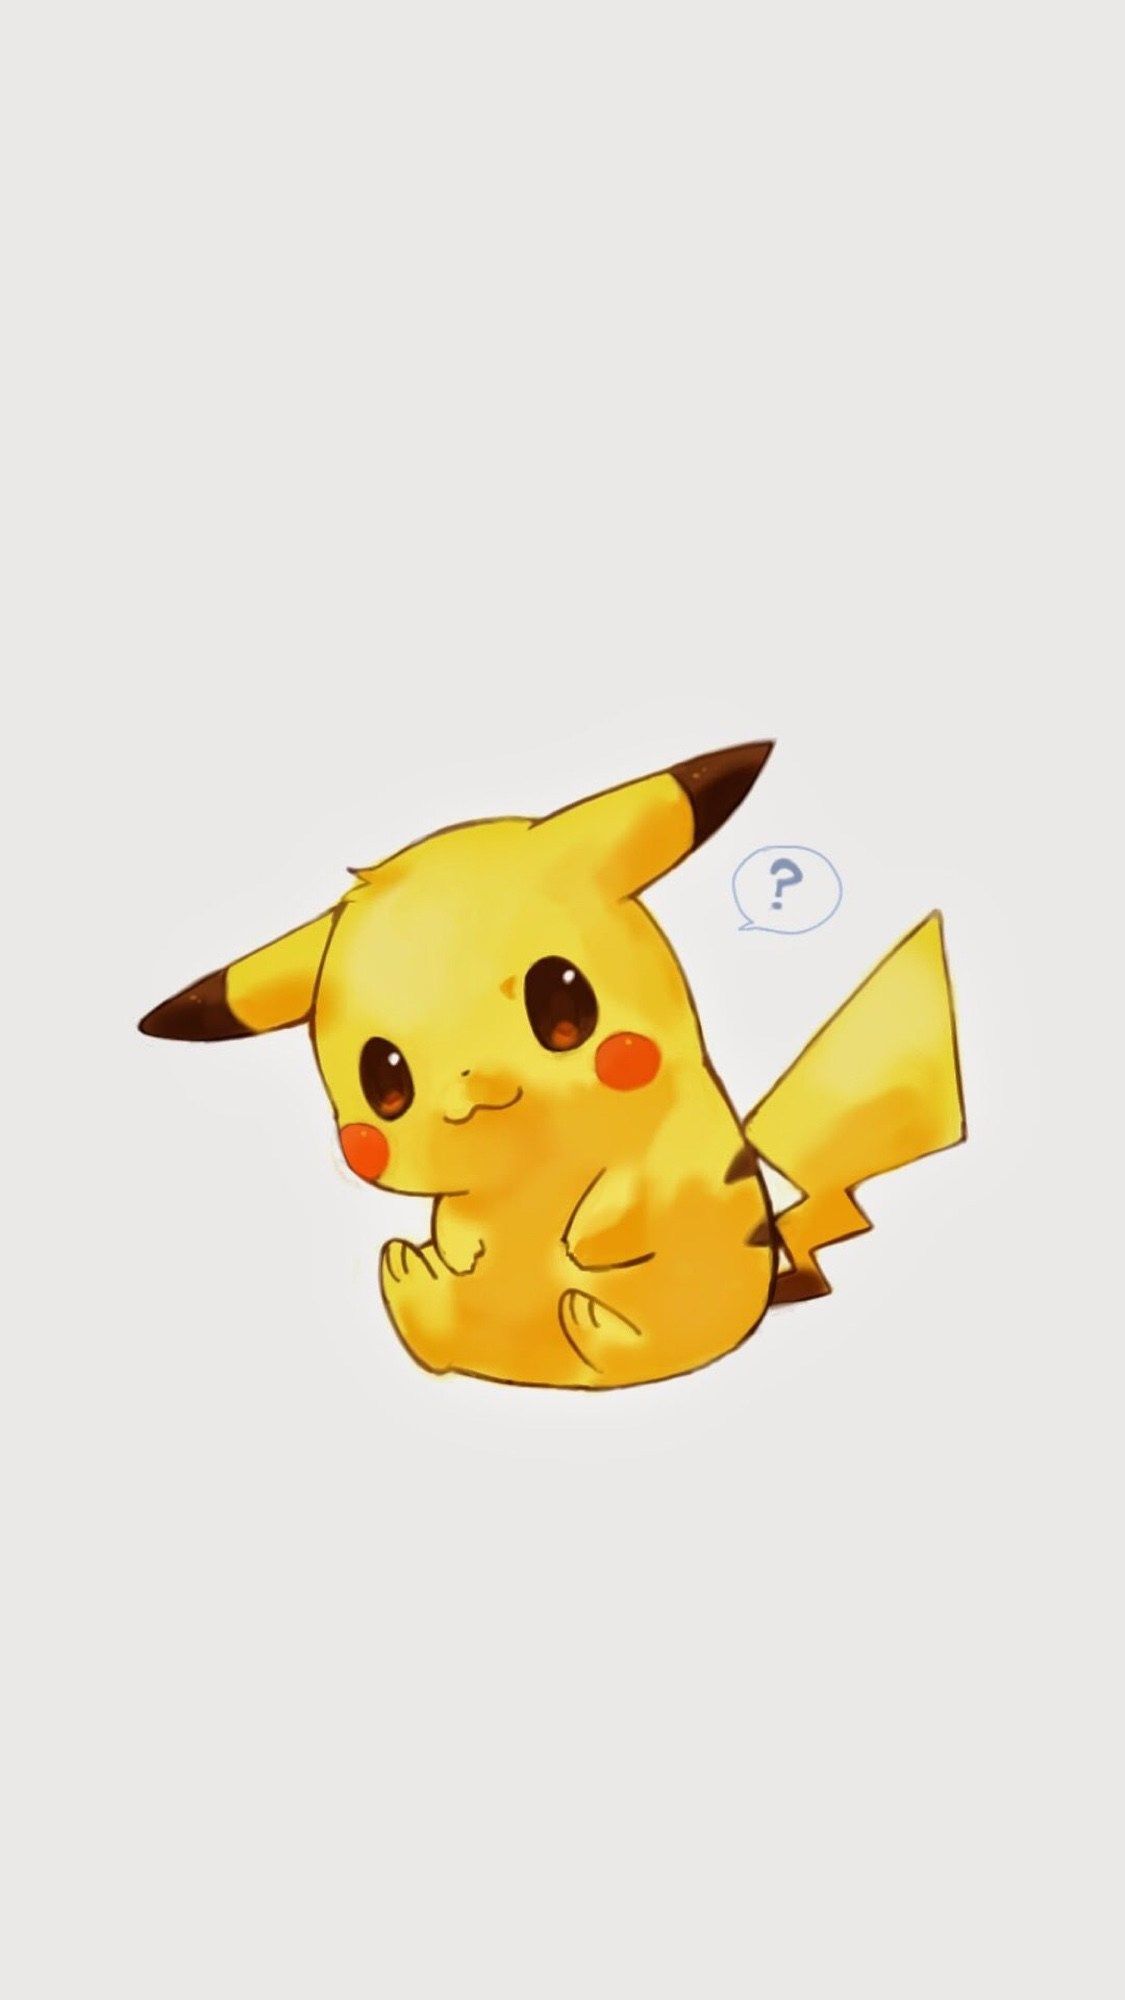 Cute pikachu Wallpaper Download